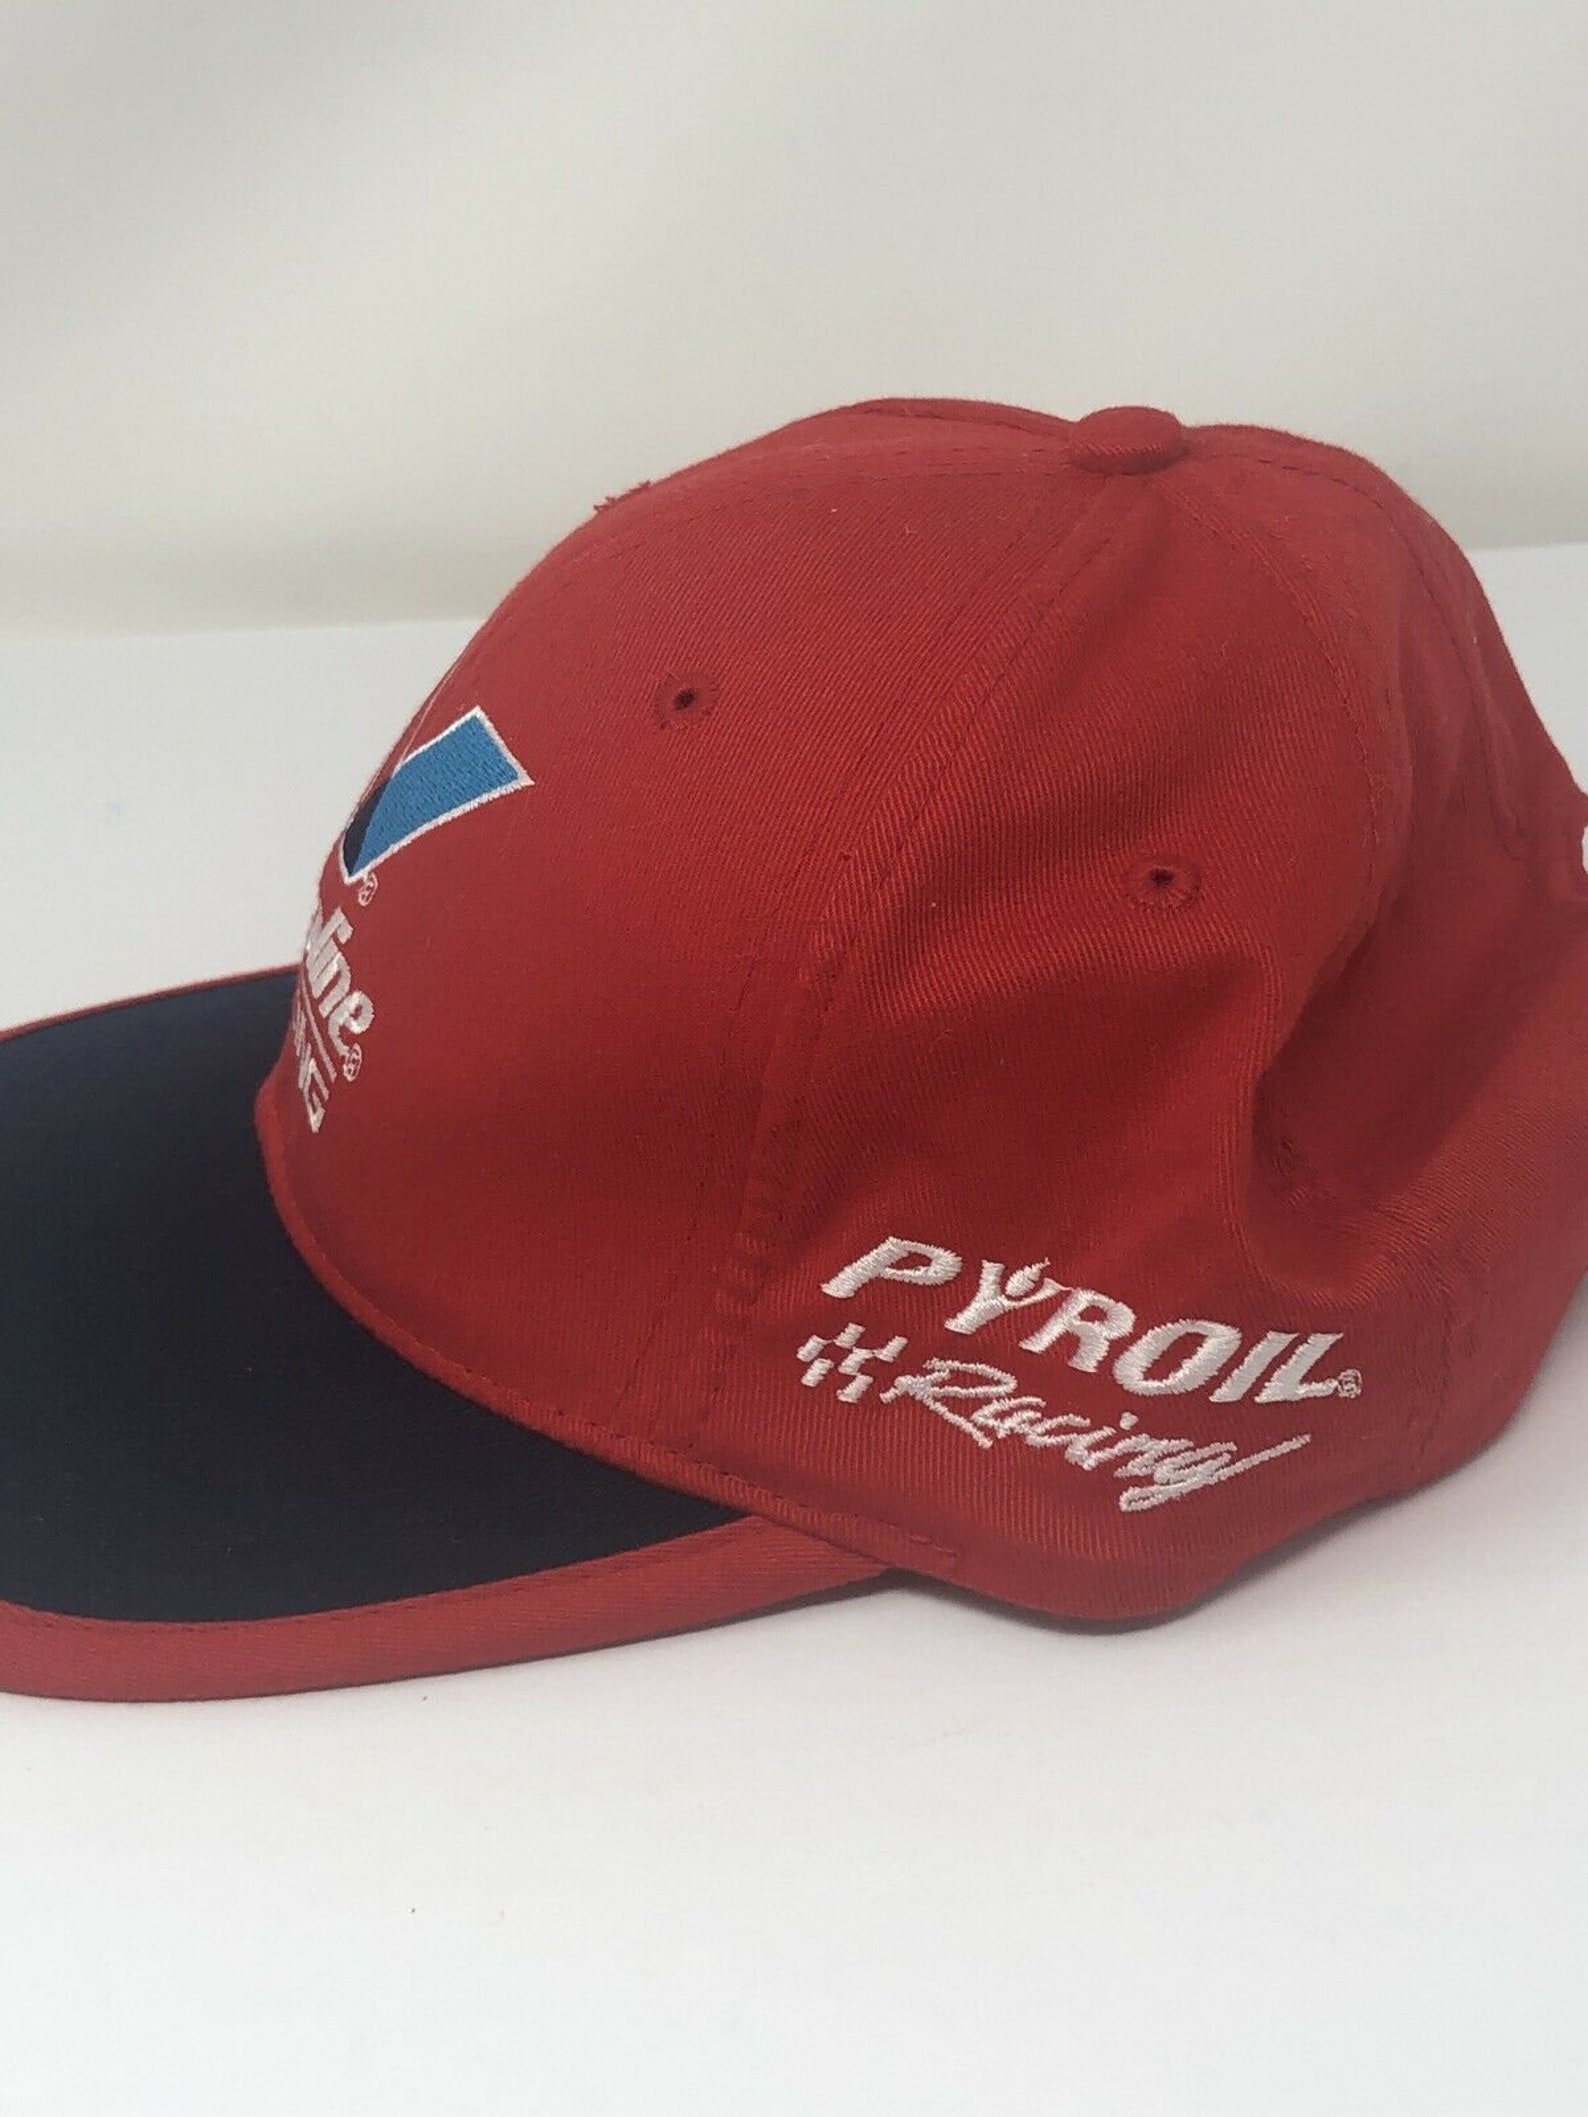 Valvoline Oil Hat Cap Strapback Promo Racing Baseball | Etsy